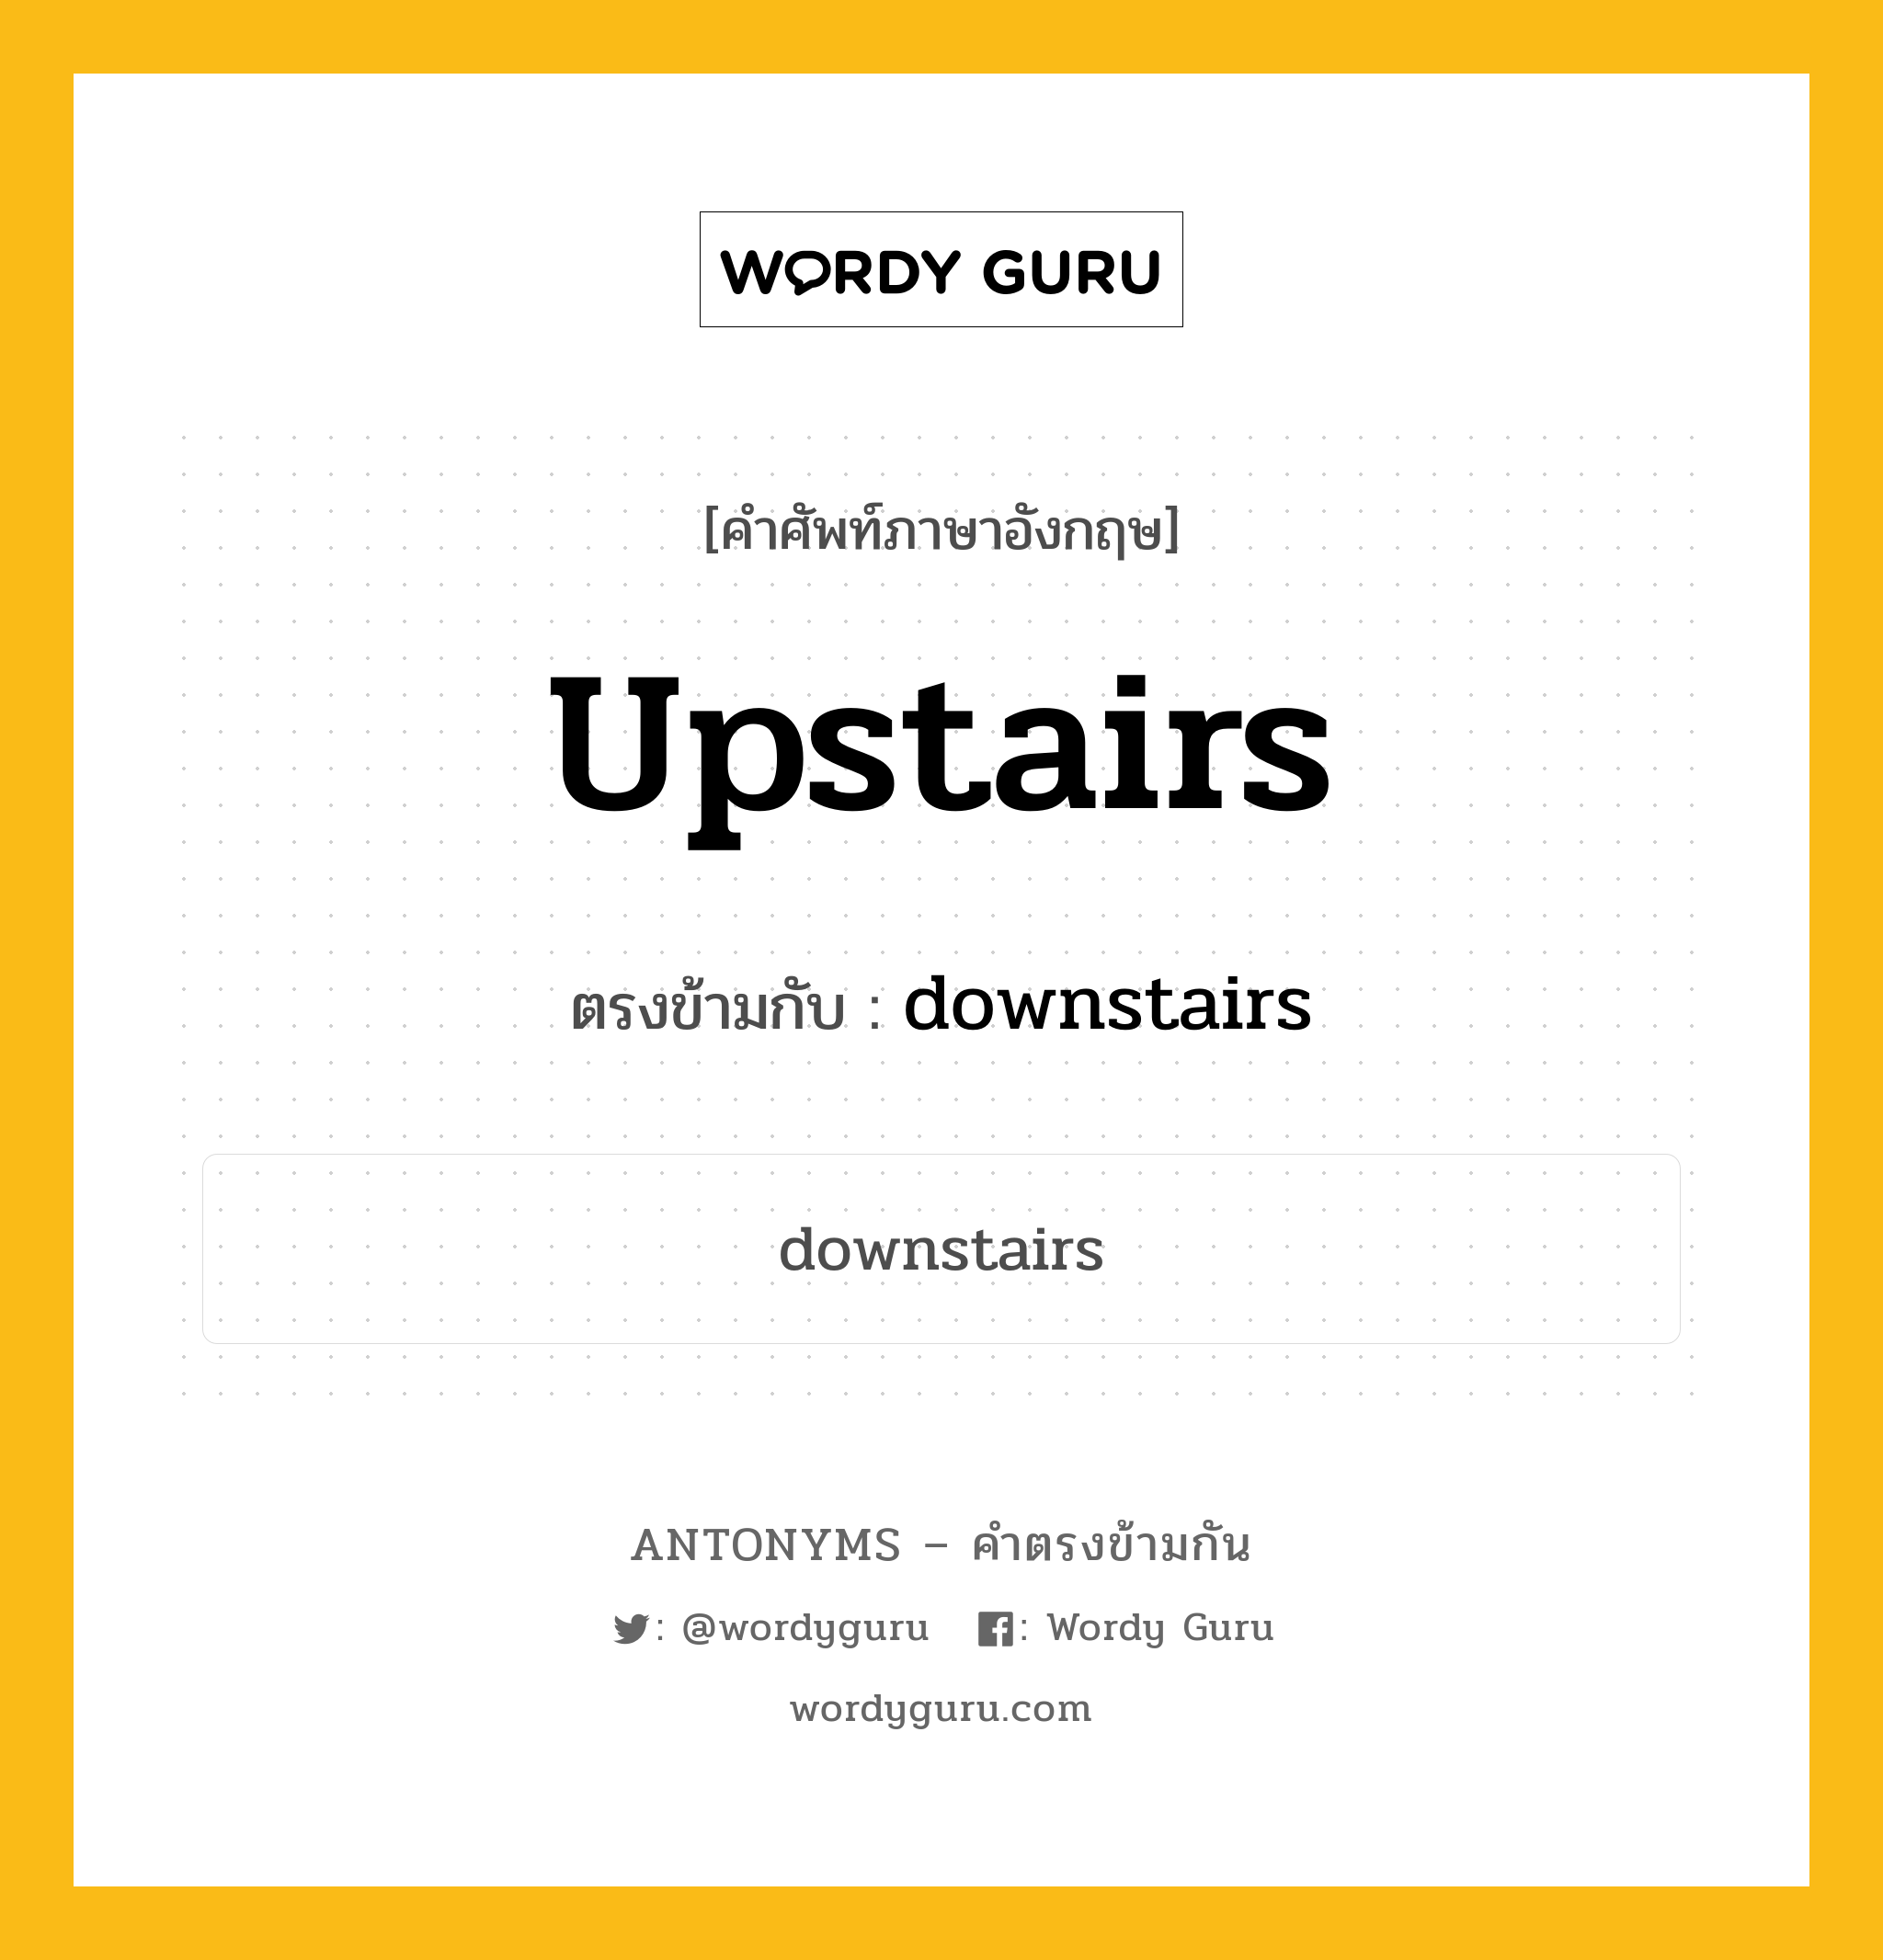 upstairs เป็นคำตรงข้ามกับคำไหนบ้าง?, คำศัพท์ภาษาอังกฤษ upstairs ตรงข้ามกับ downstairs หมวด downstairs